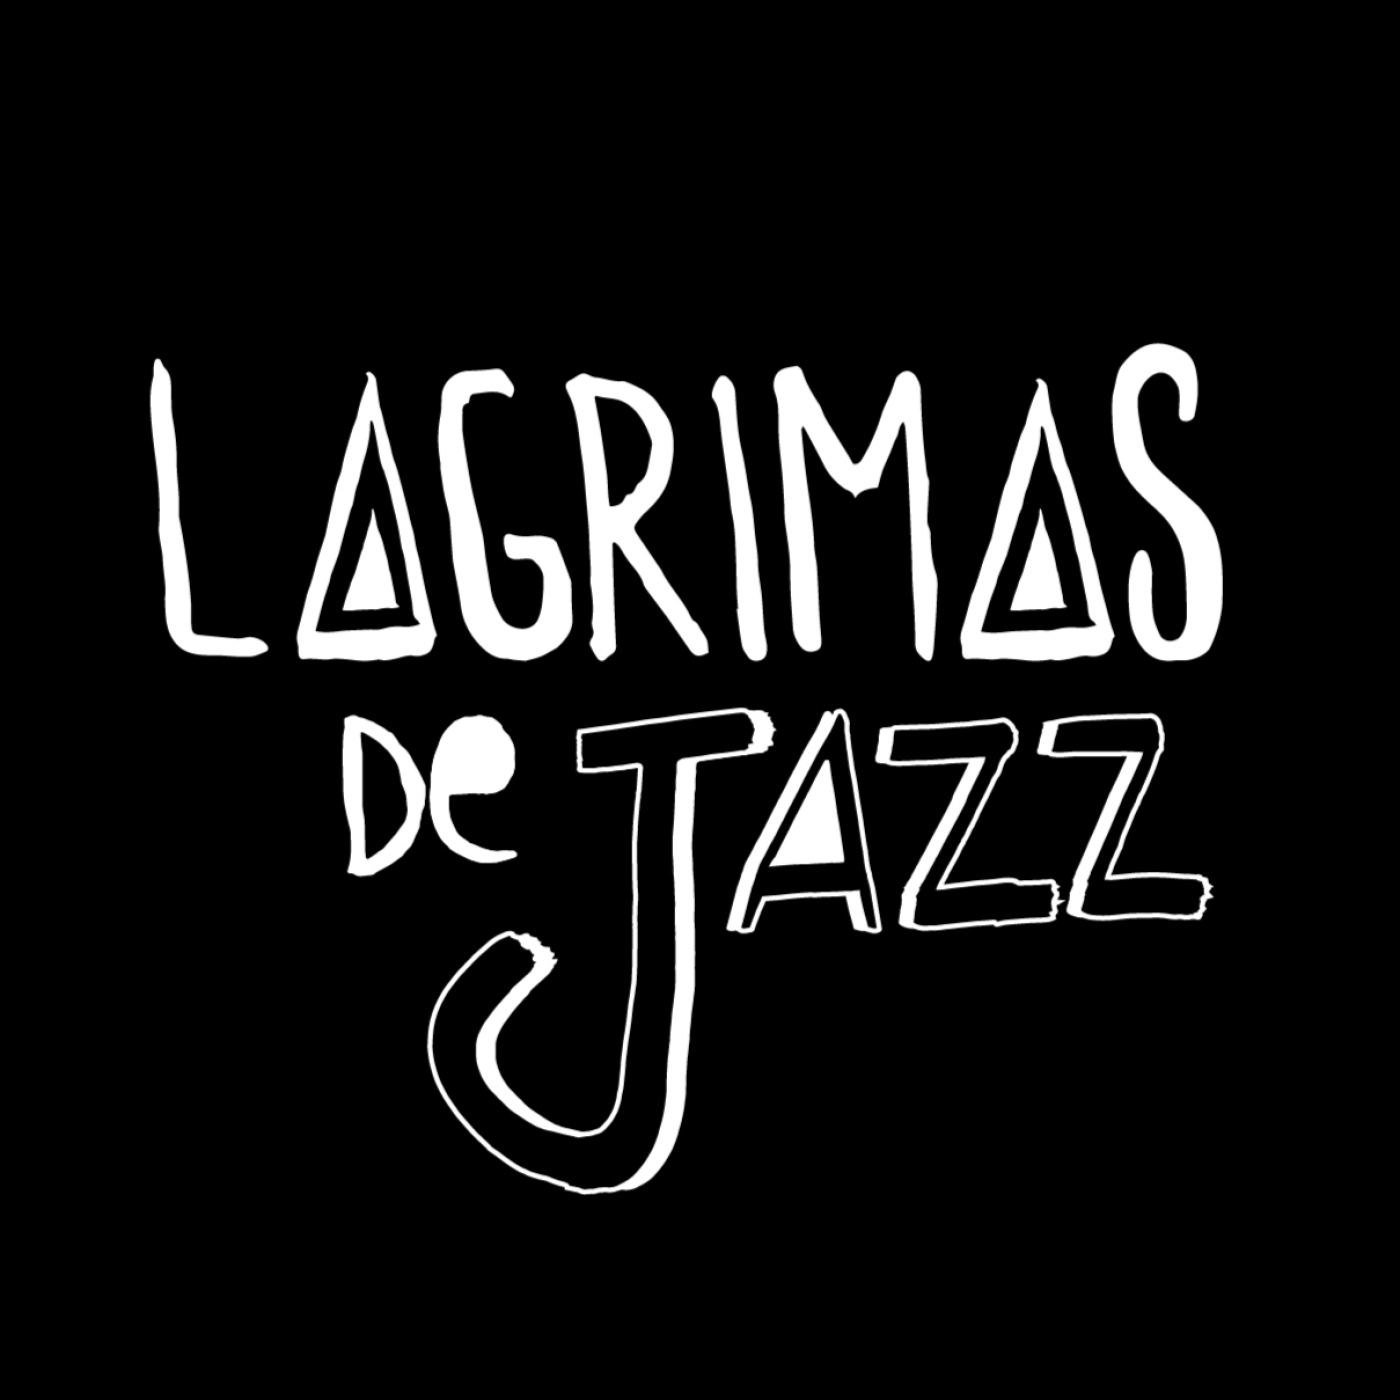 Lagrimas de Jazz